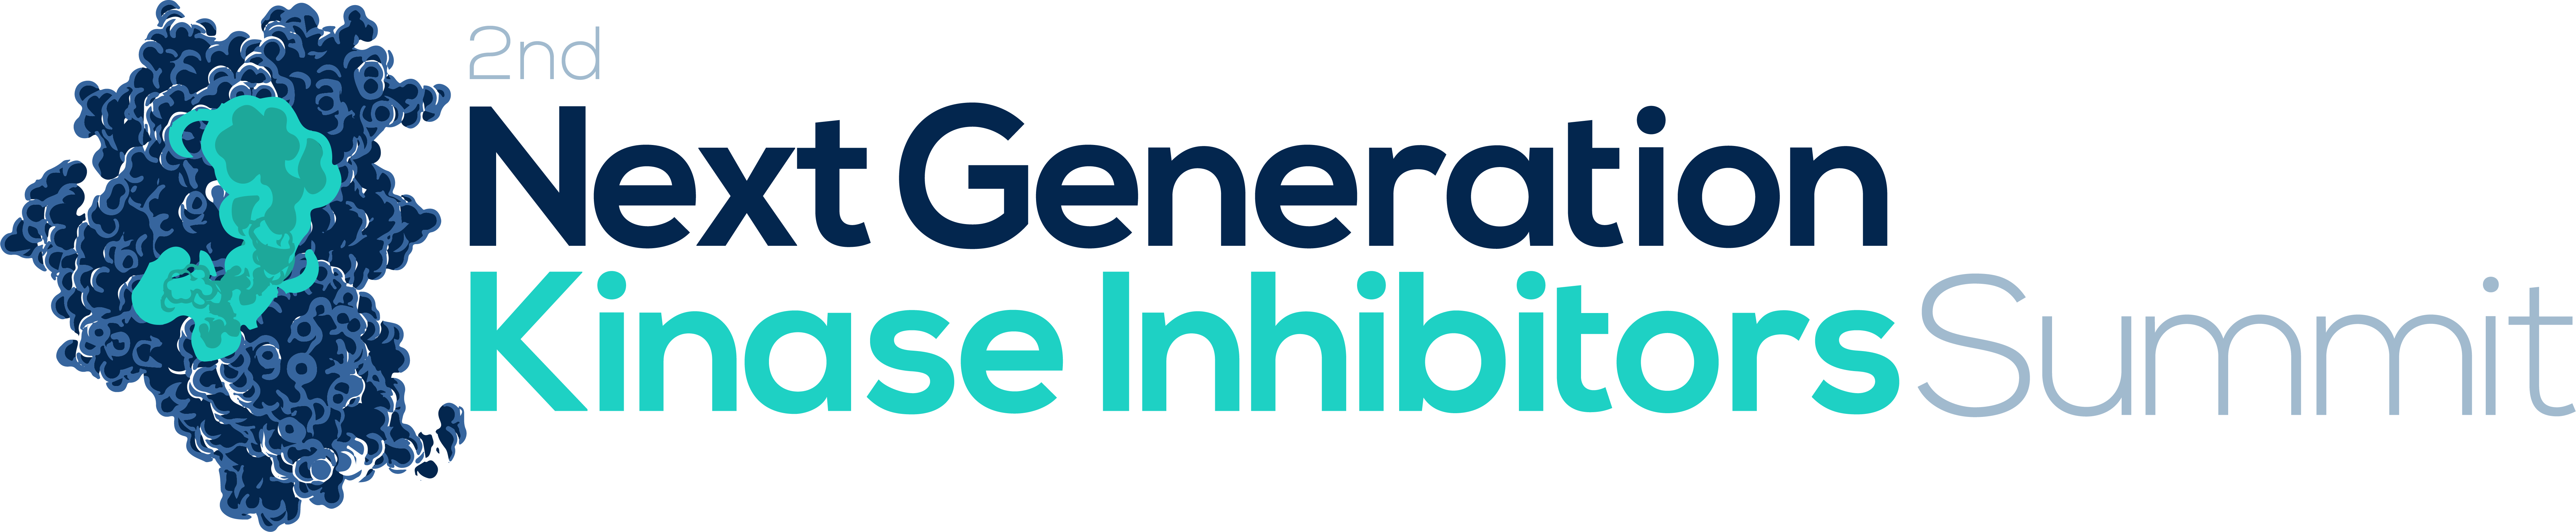 2nd Next Generation Kinase Inhibitors Summit logo FINAL